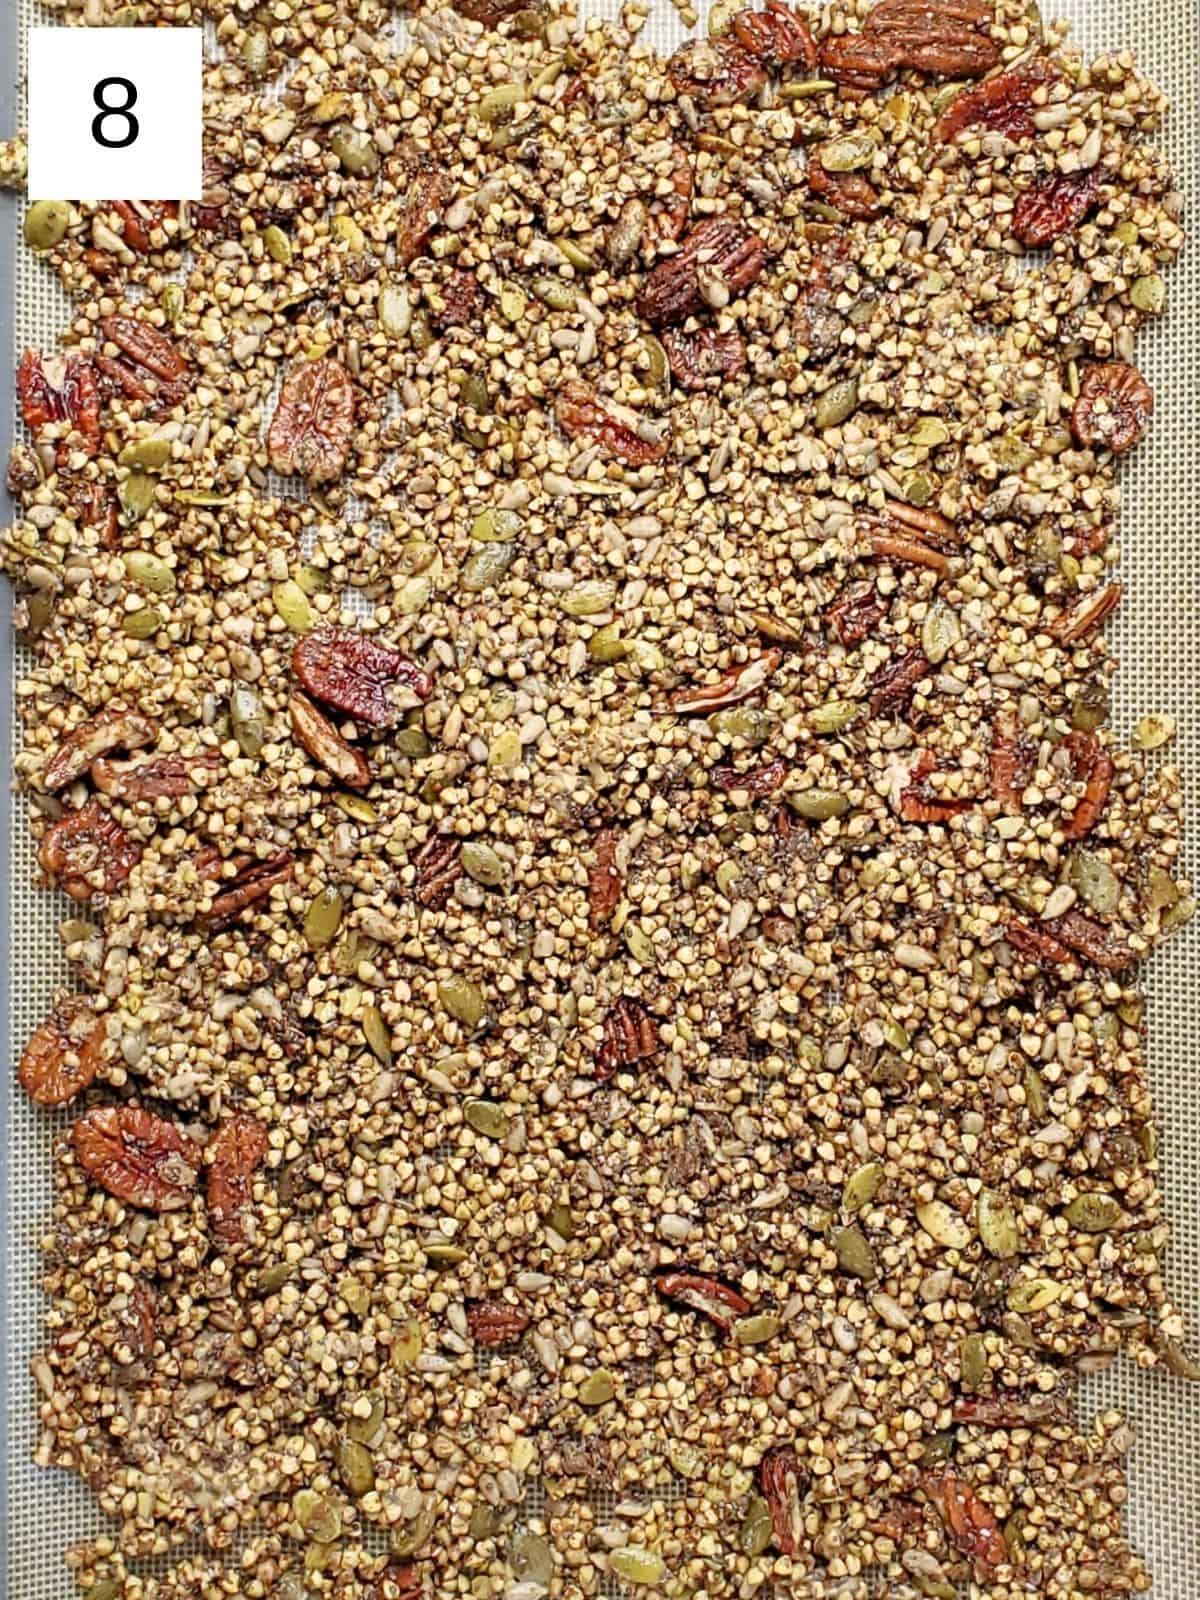 Granola nuts mixture on a baking tray.